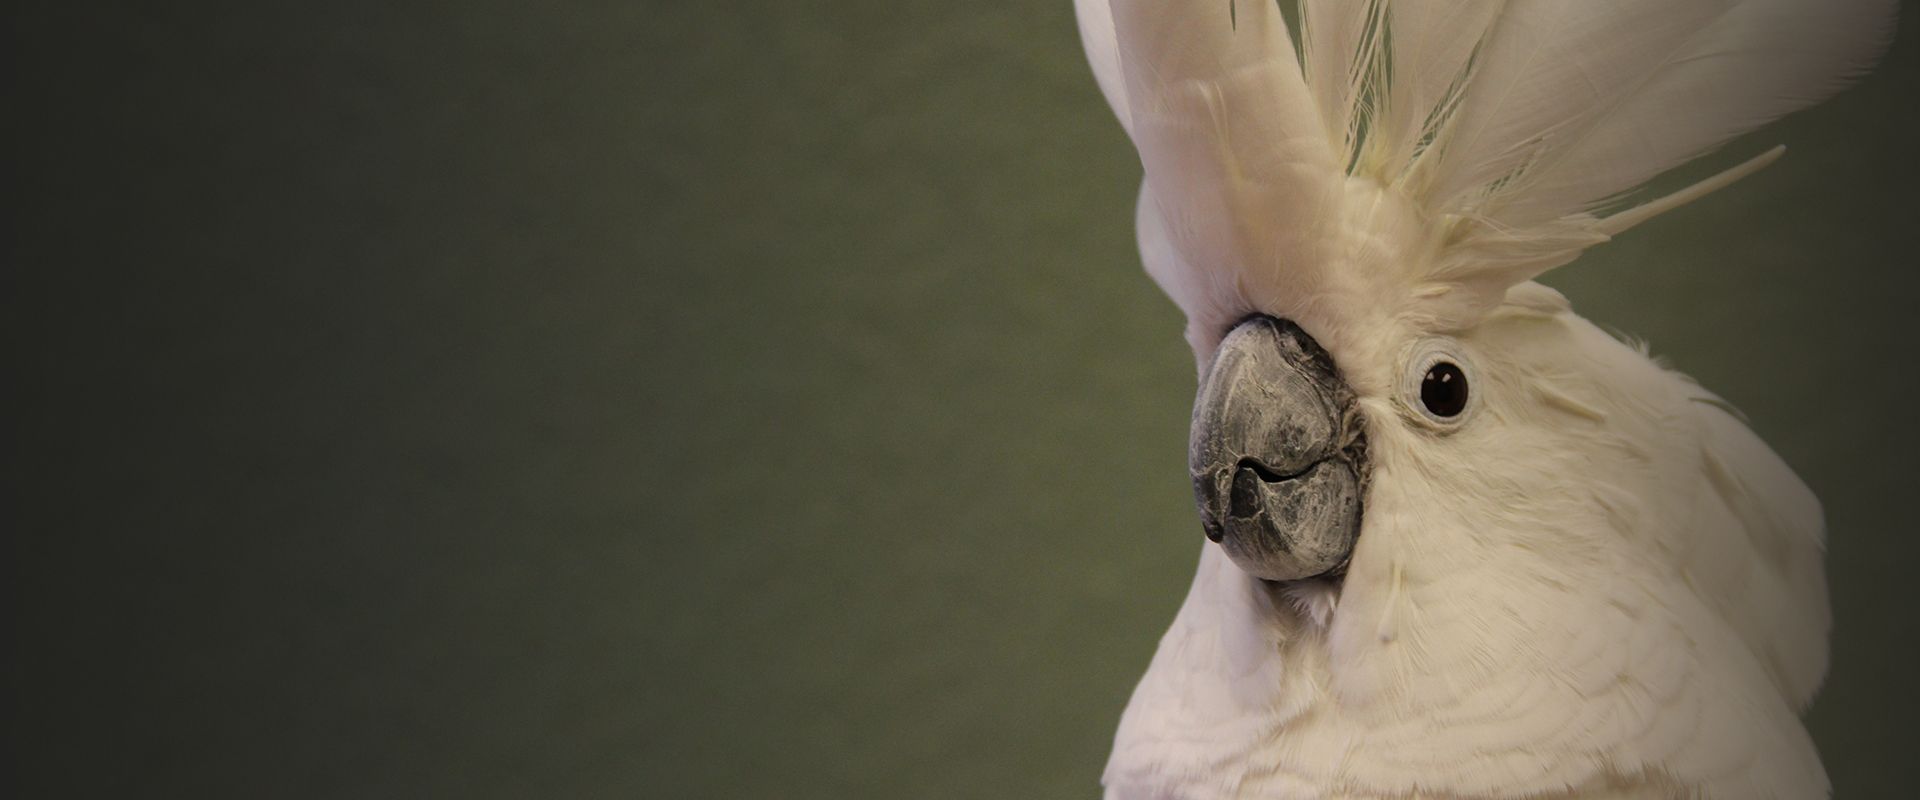 white cockatoo close up